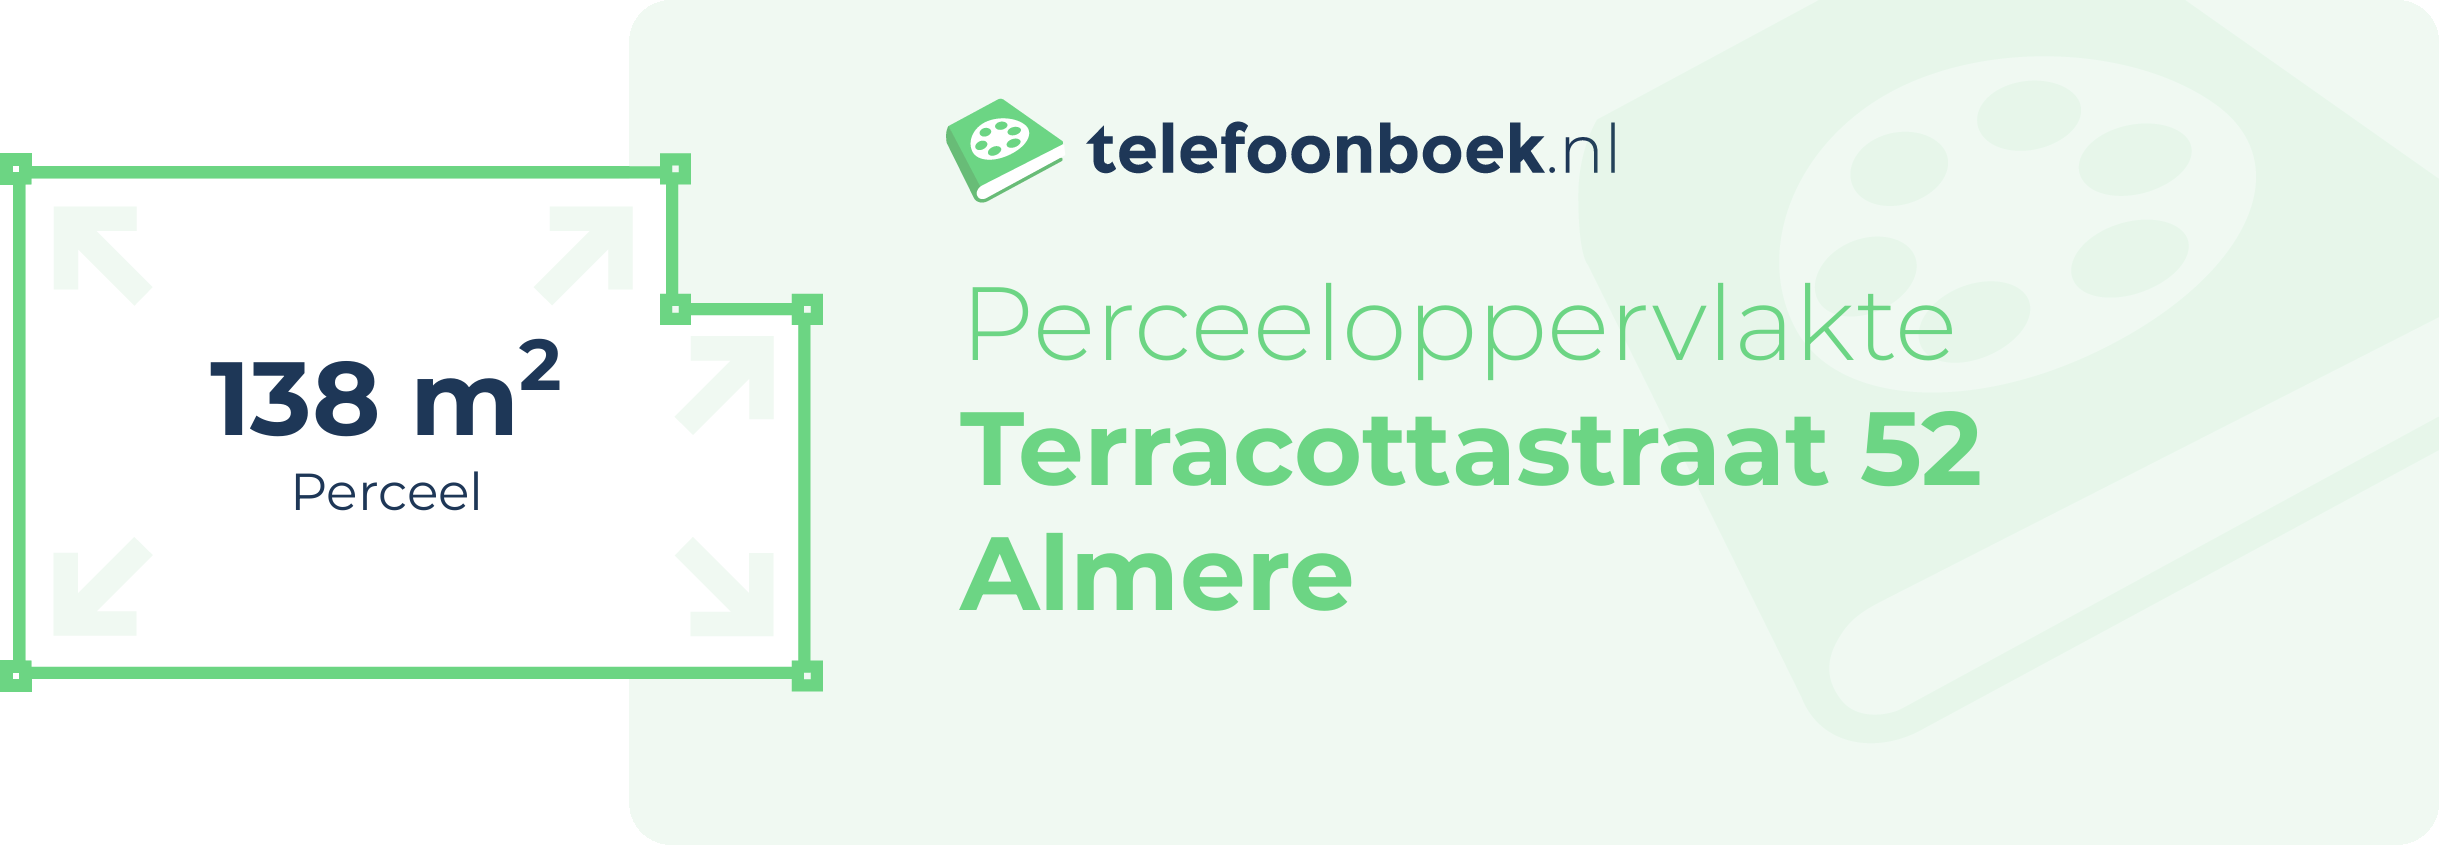 Perceeloppervlakte Terracottastraat 52 Almere